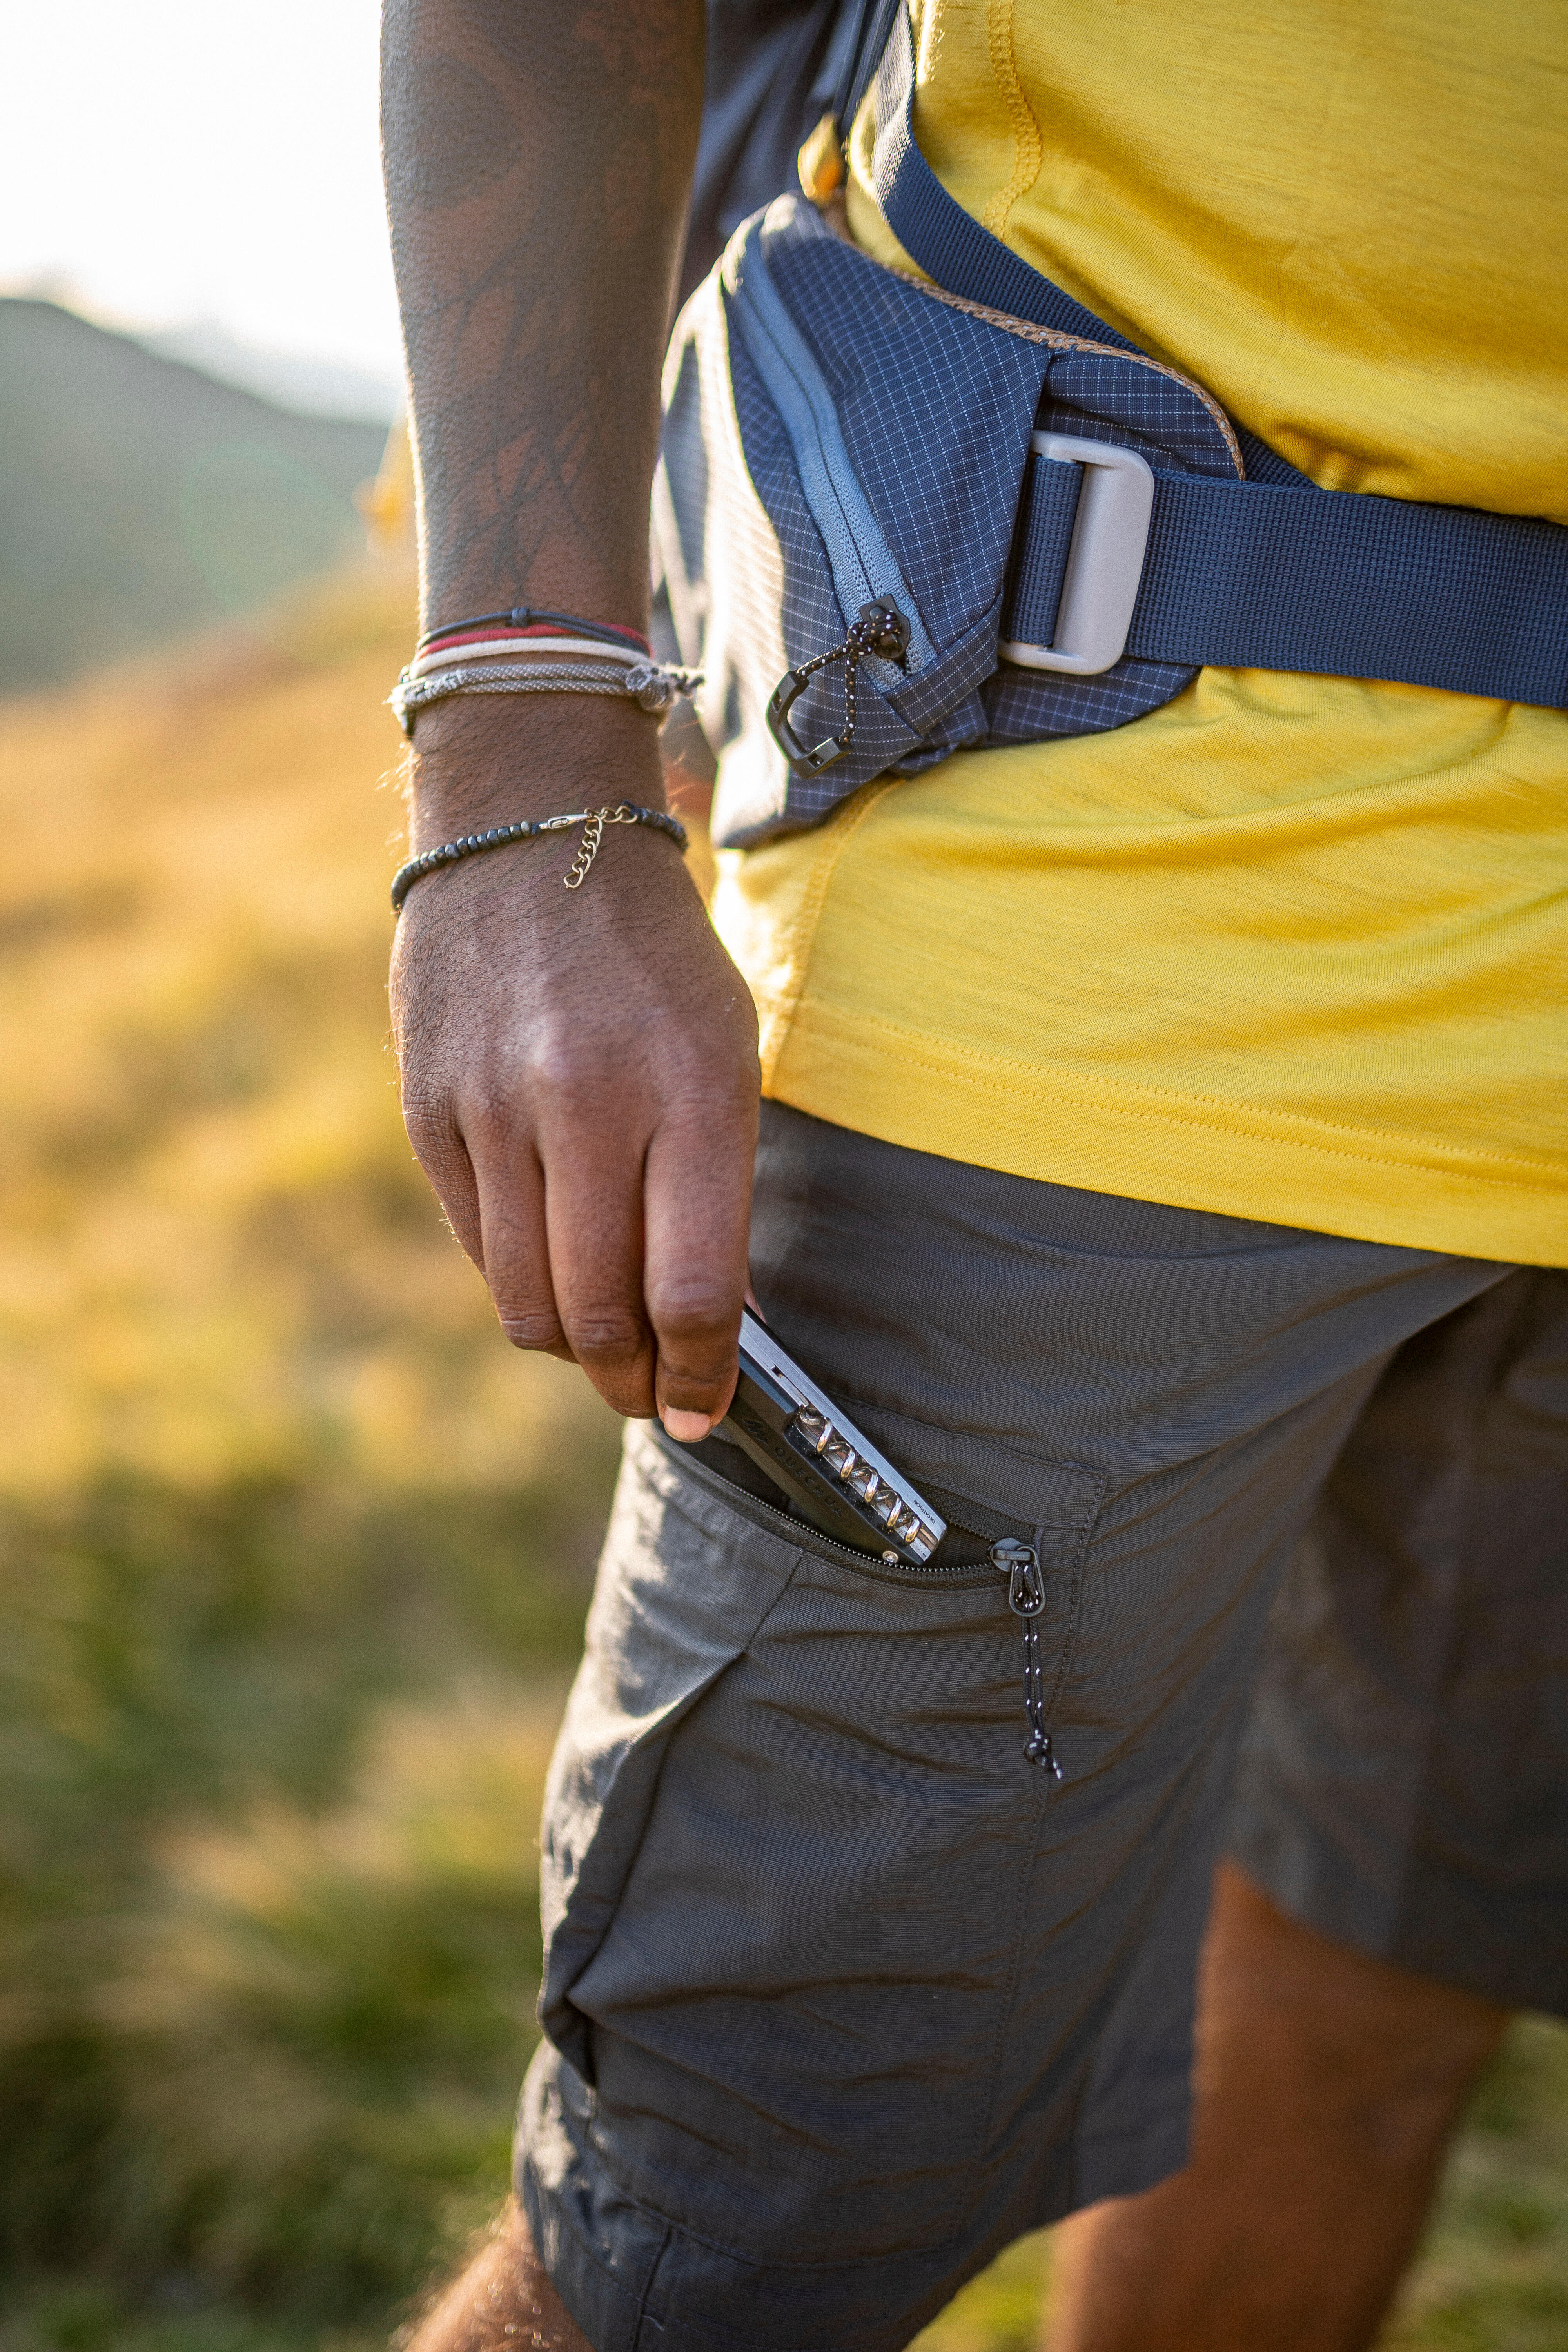 Men's Hiking Shorts - MT 500  - FORCLAZ